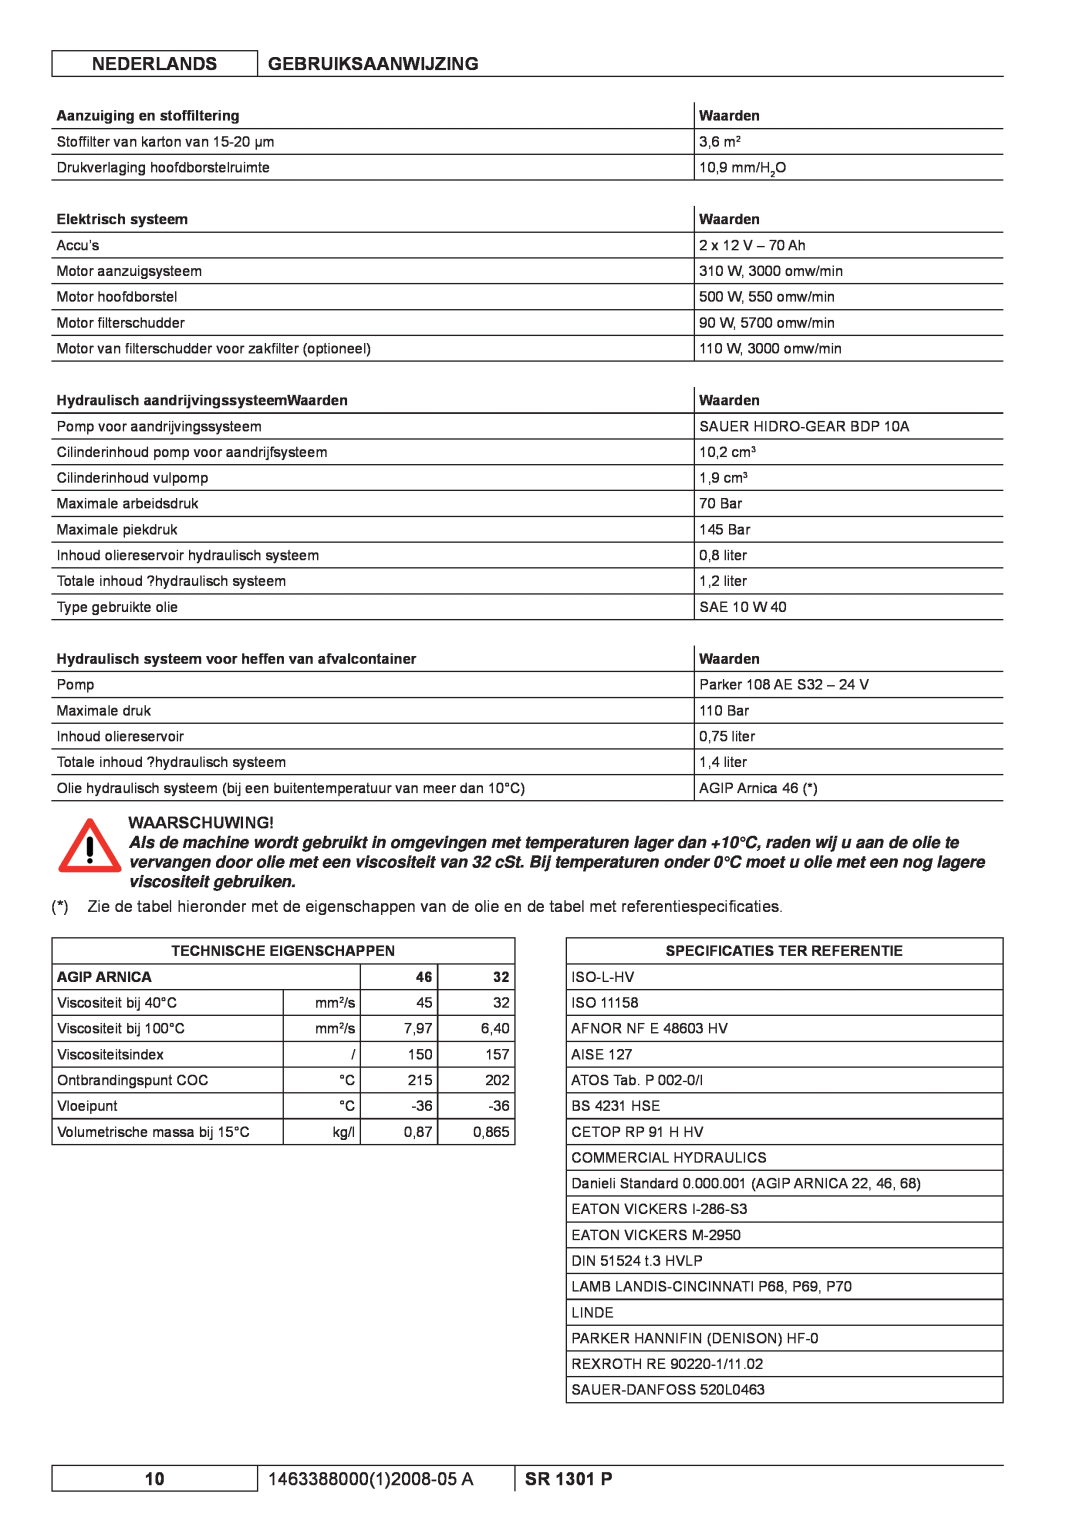 Nilfisk-ALTO SR 1301 P manuel dutilisation Nederlands, Gebruiksaanwijzing, 146338800012008-05 A, Waarschuwing 